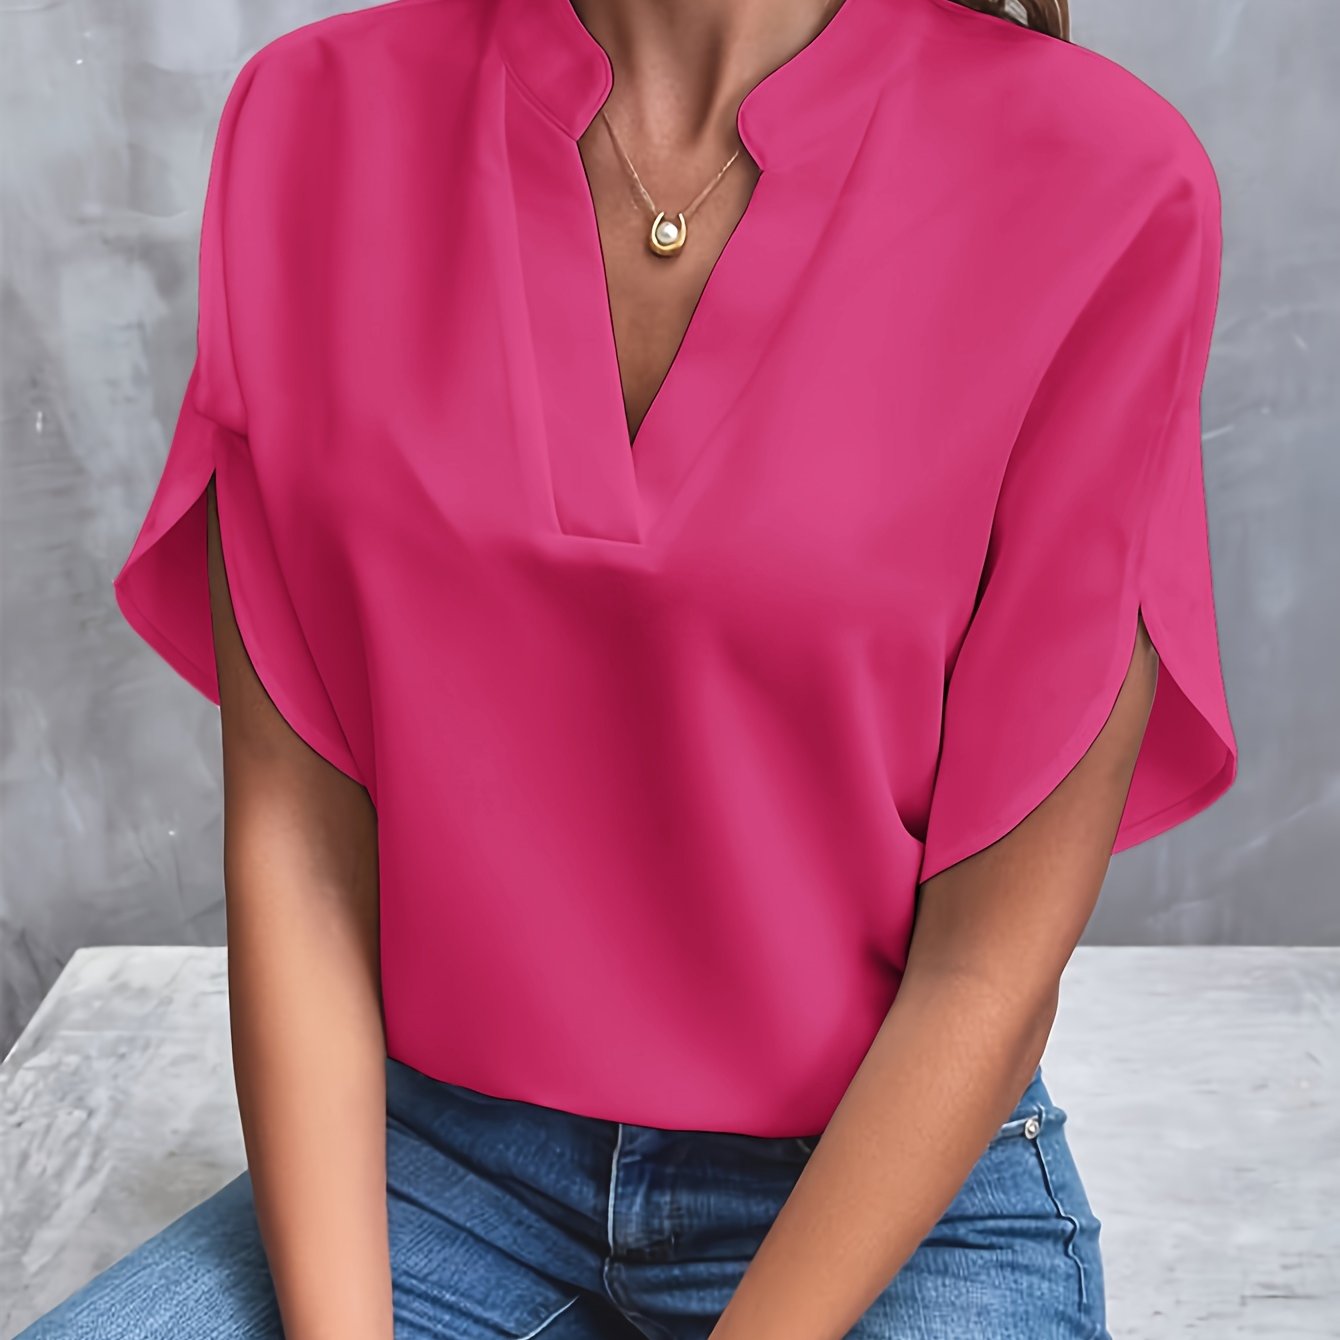 Carroll light and elegant blouse